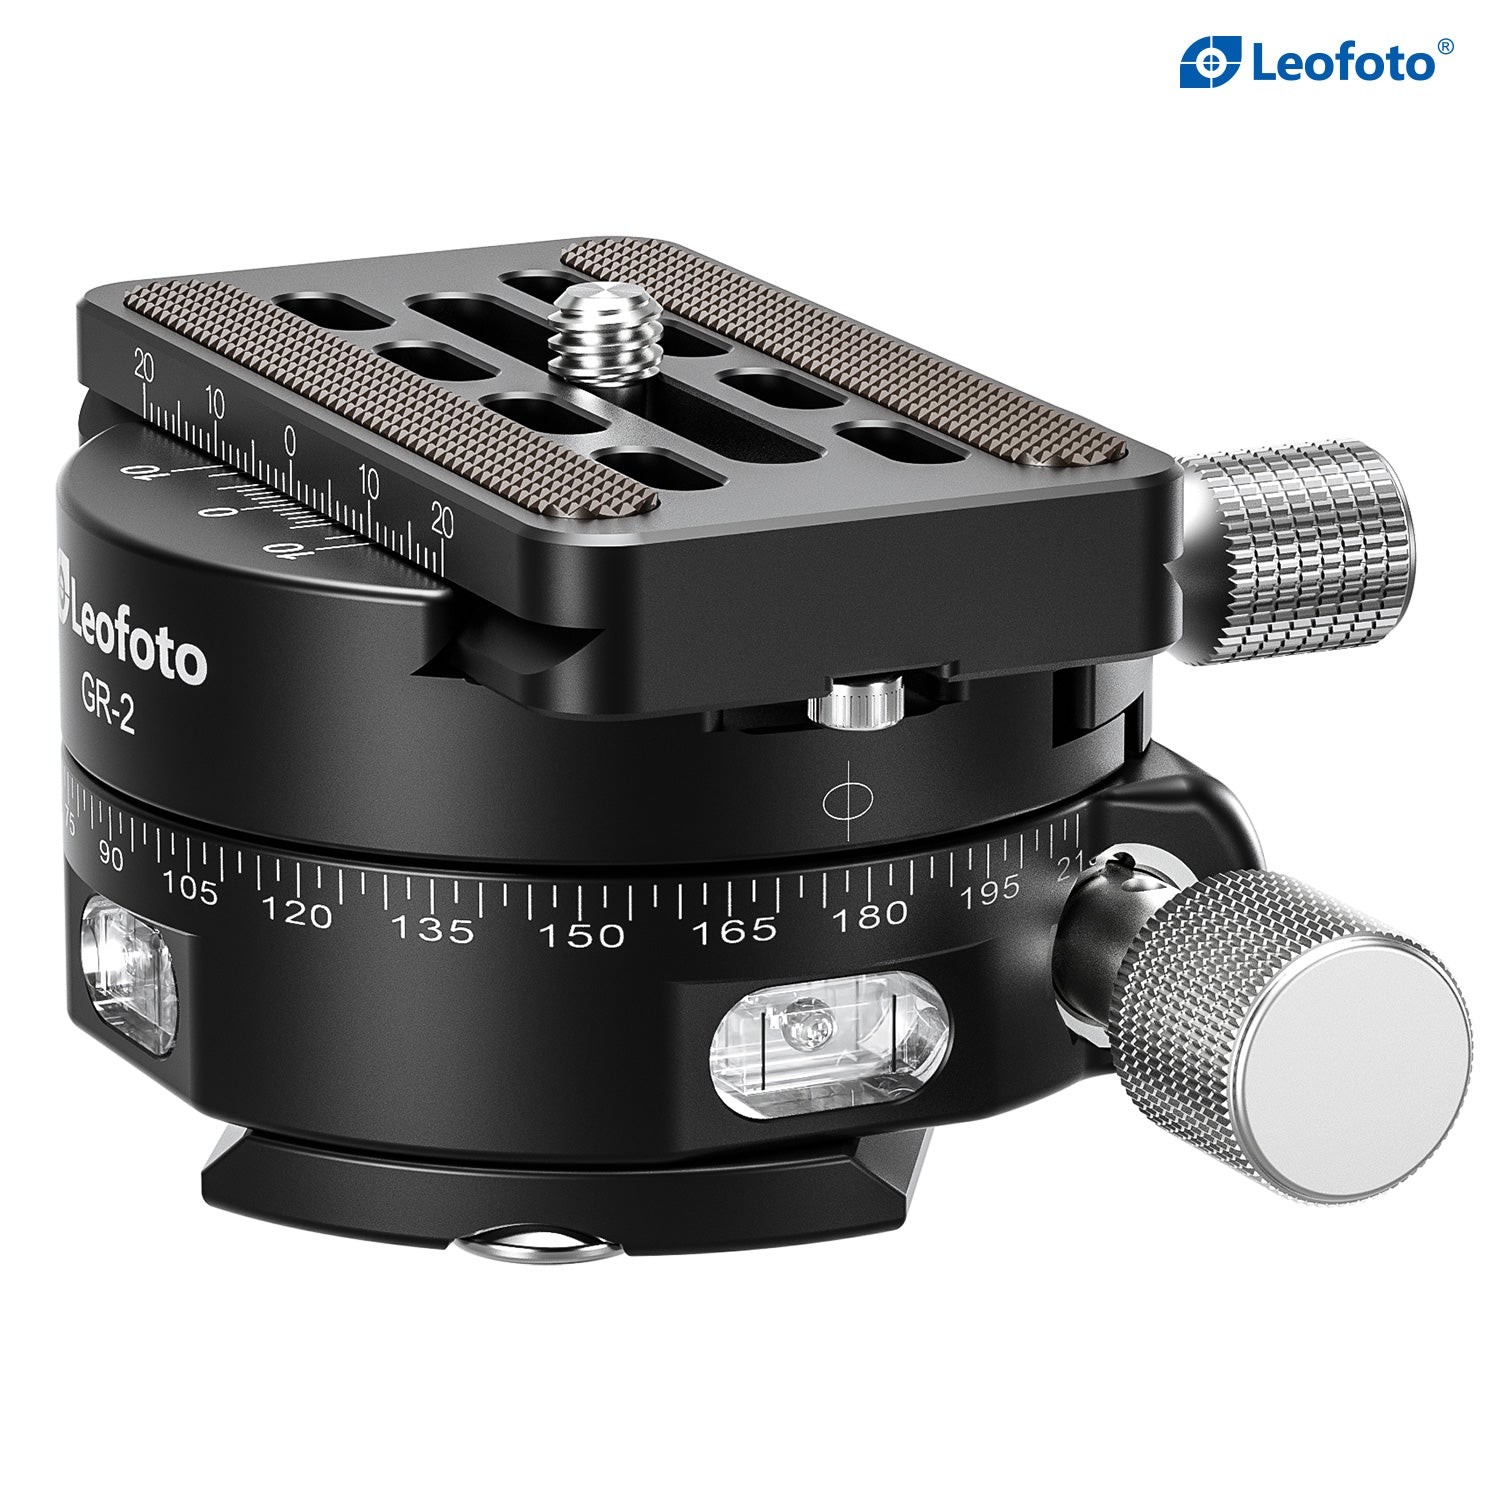 "Open Box" Leofoto GR-2 Geared Panning Adapter | Arca Compatible